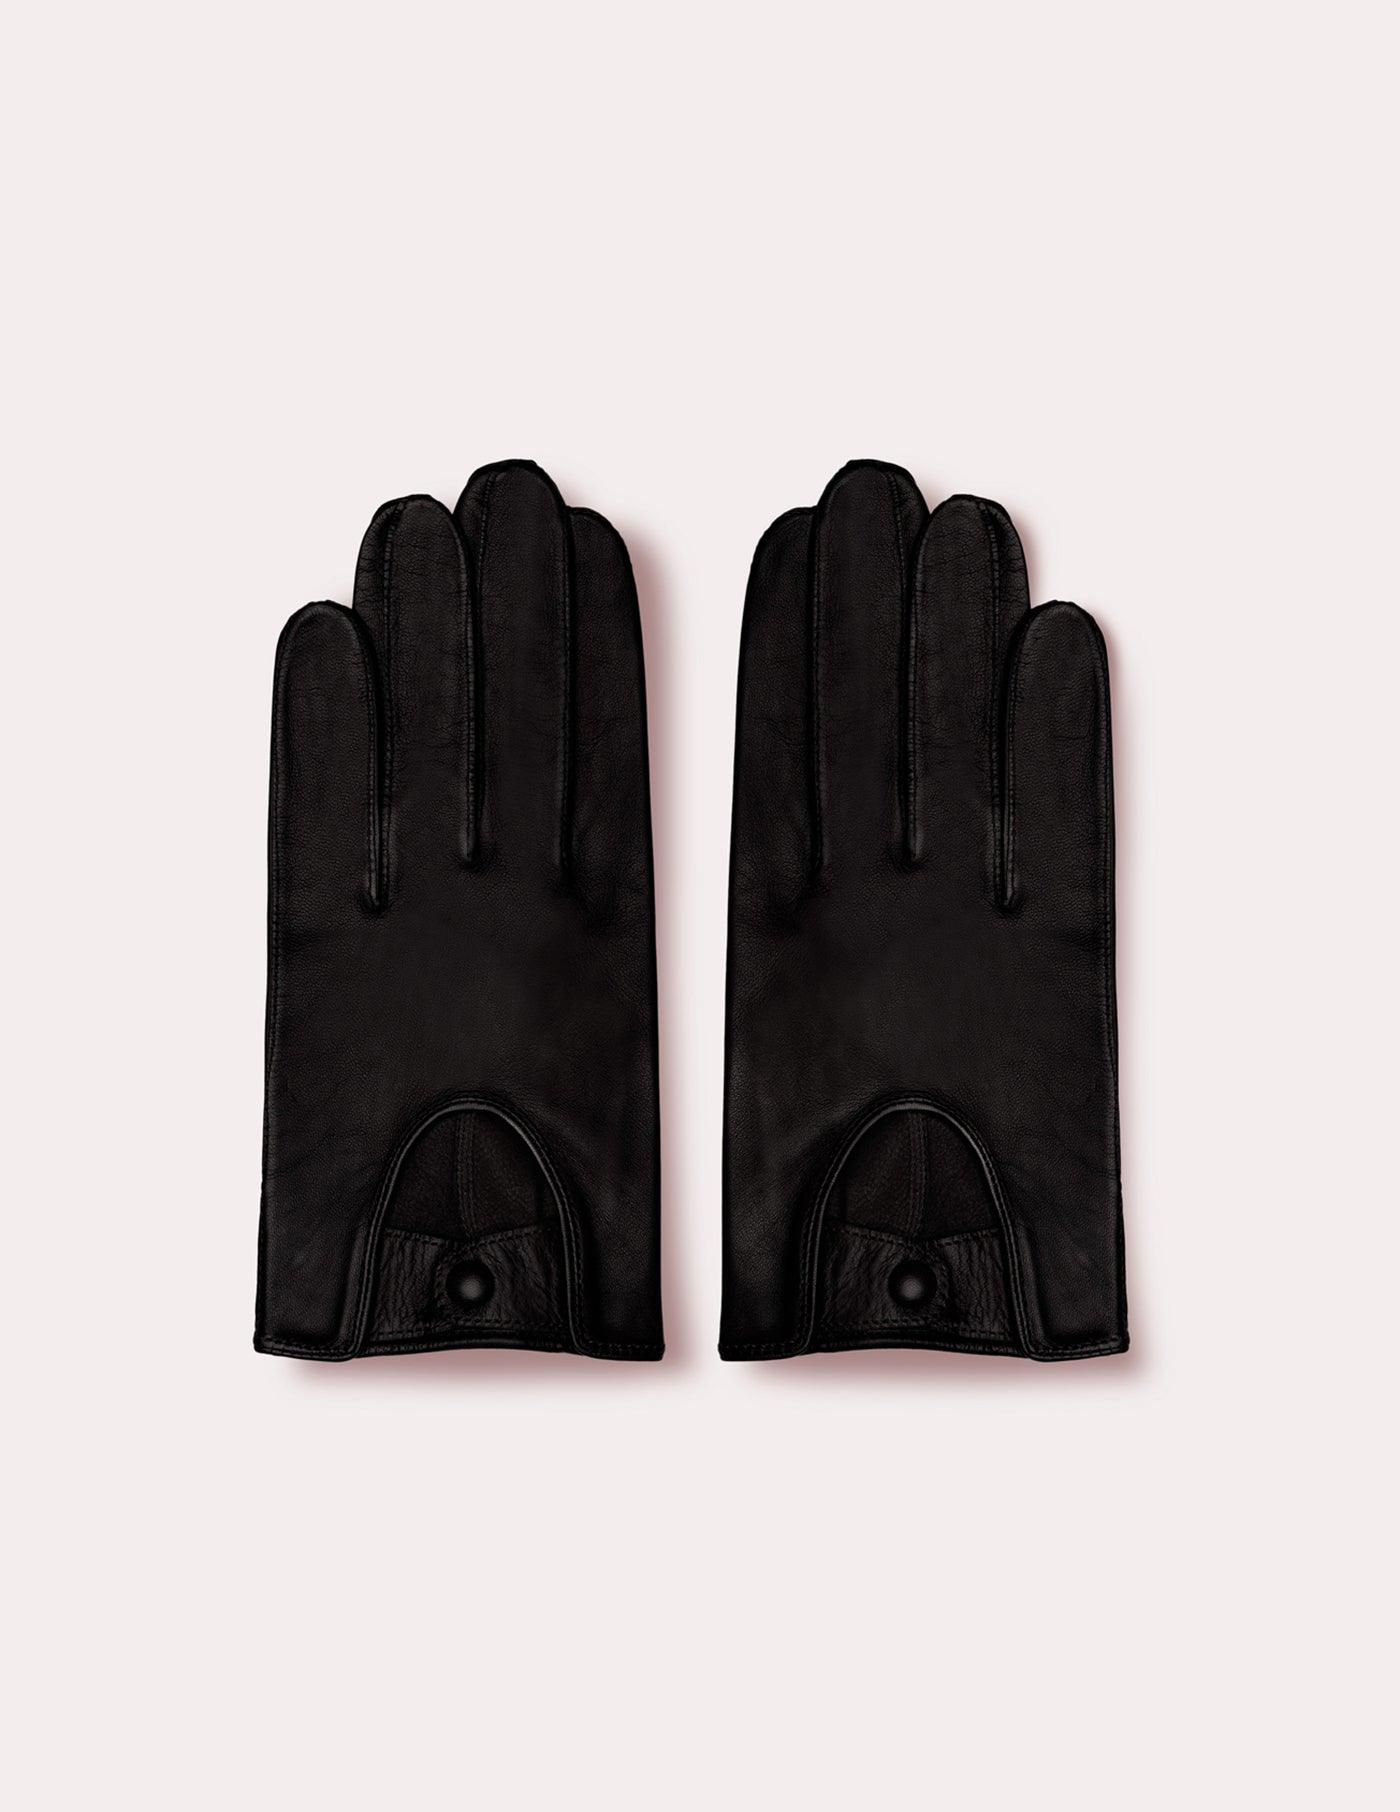 Black Driving Gloves